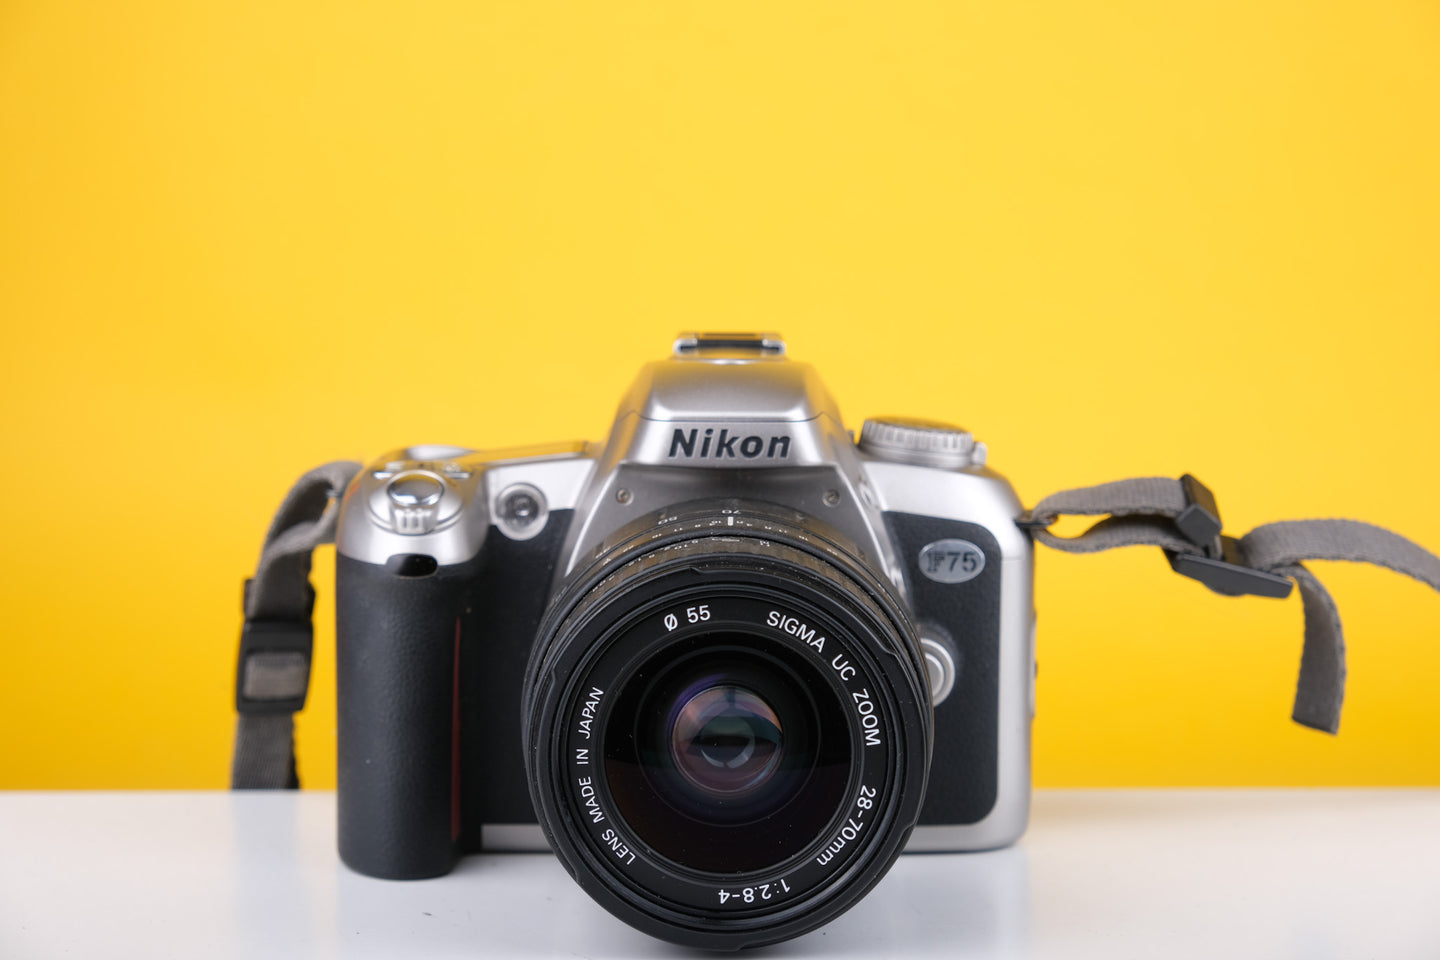 Nikon F55 35mm SLR Film Camera with Sigma 28-70mm f2.8-4 Lens